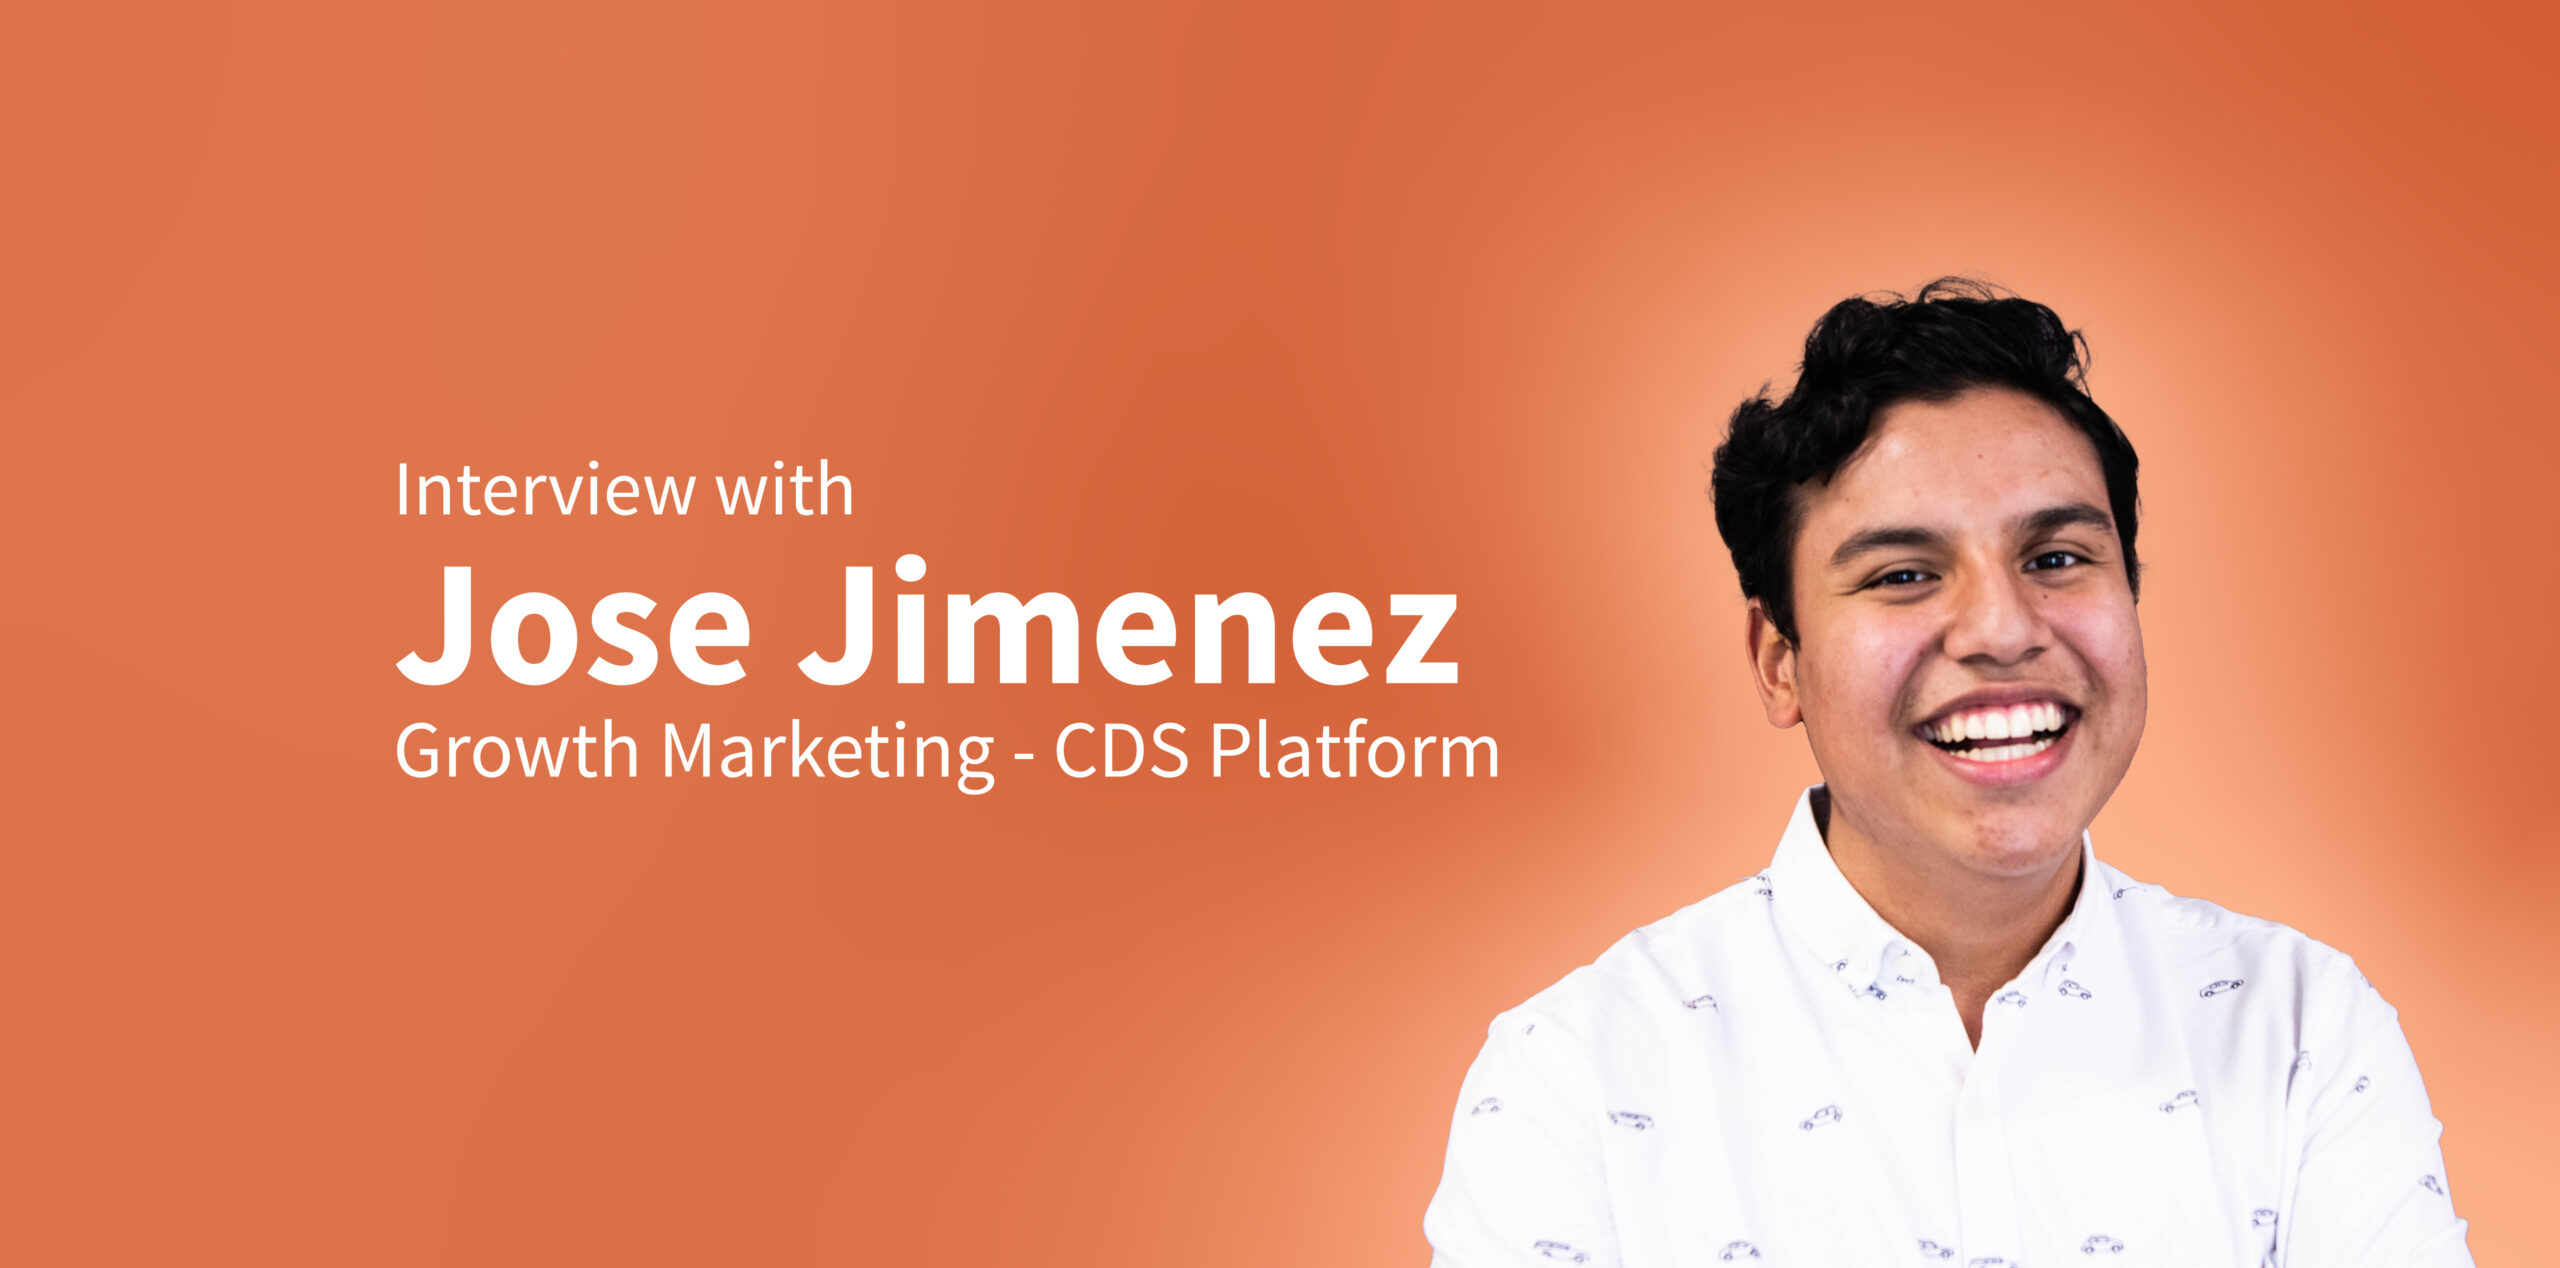 Interview with Jose Jimenez from CDS Platform’s Growth Marketing team.